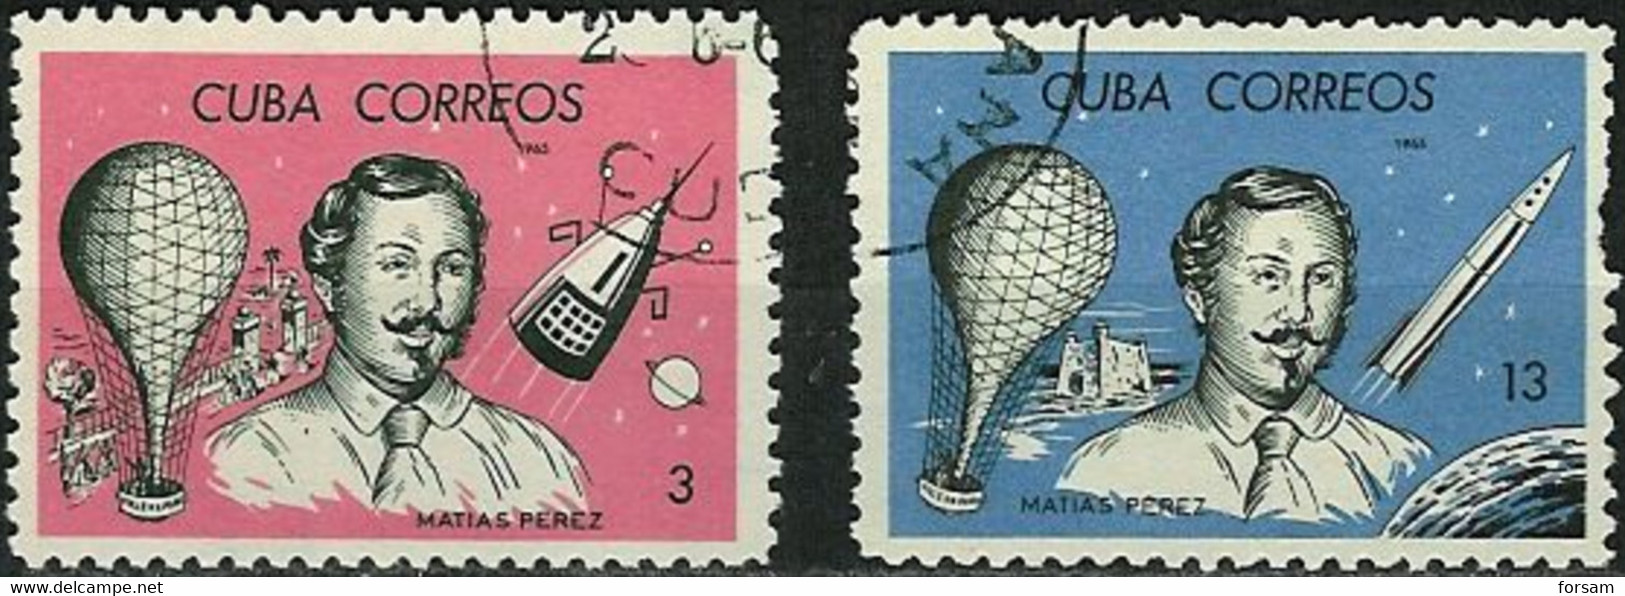 CUBA..1965...Michel # 1033-1034...used...MiCV - 2.20 Euro. - Gebraucht